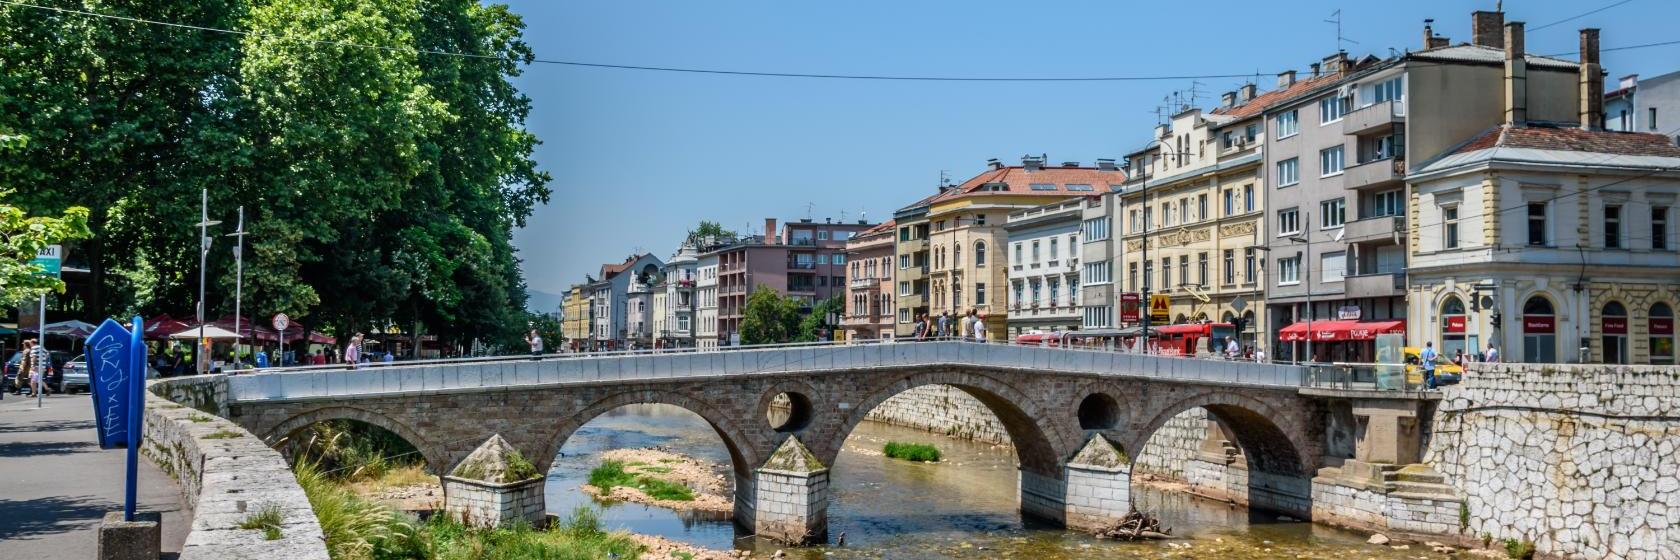 10 Best Sarajevo Hotels, Bosnia and Herzegovina (From $21)